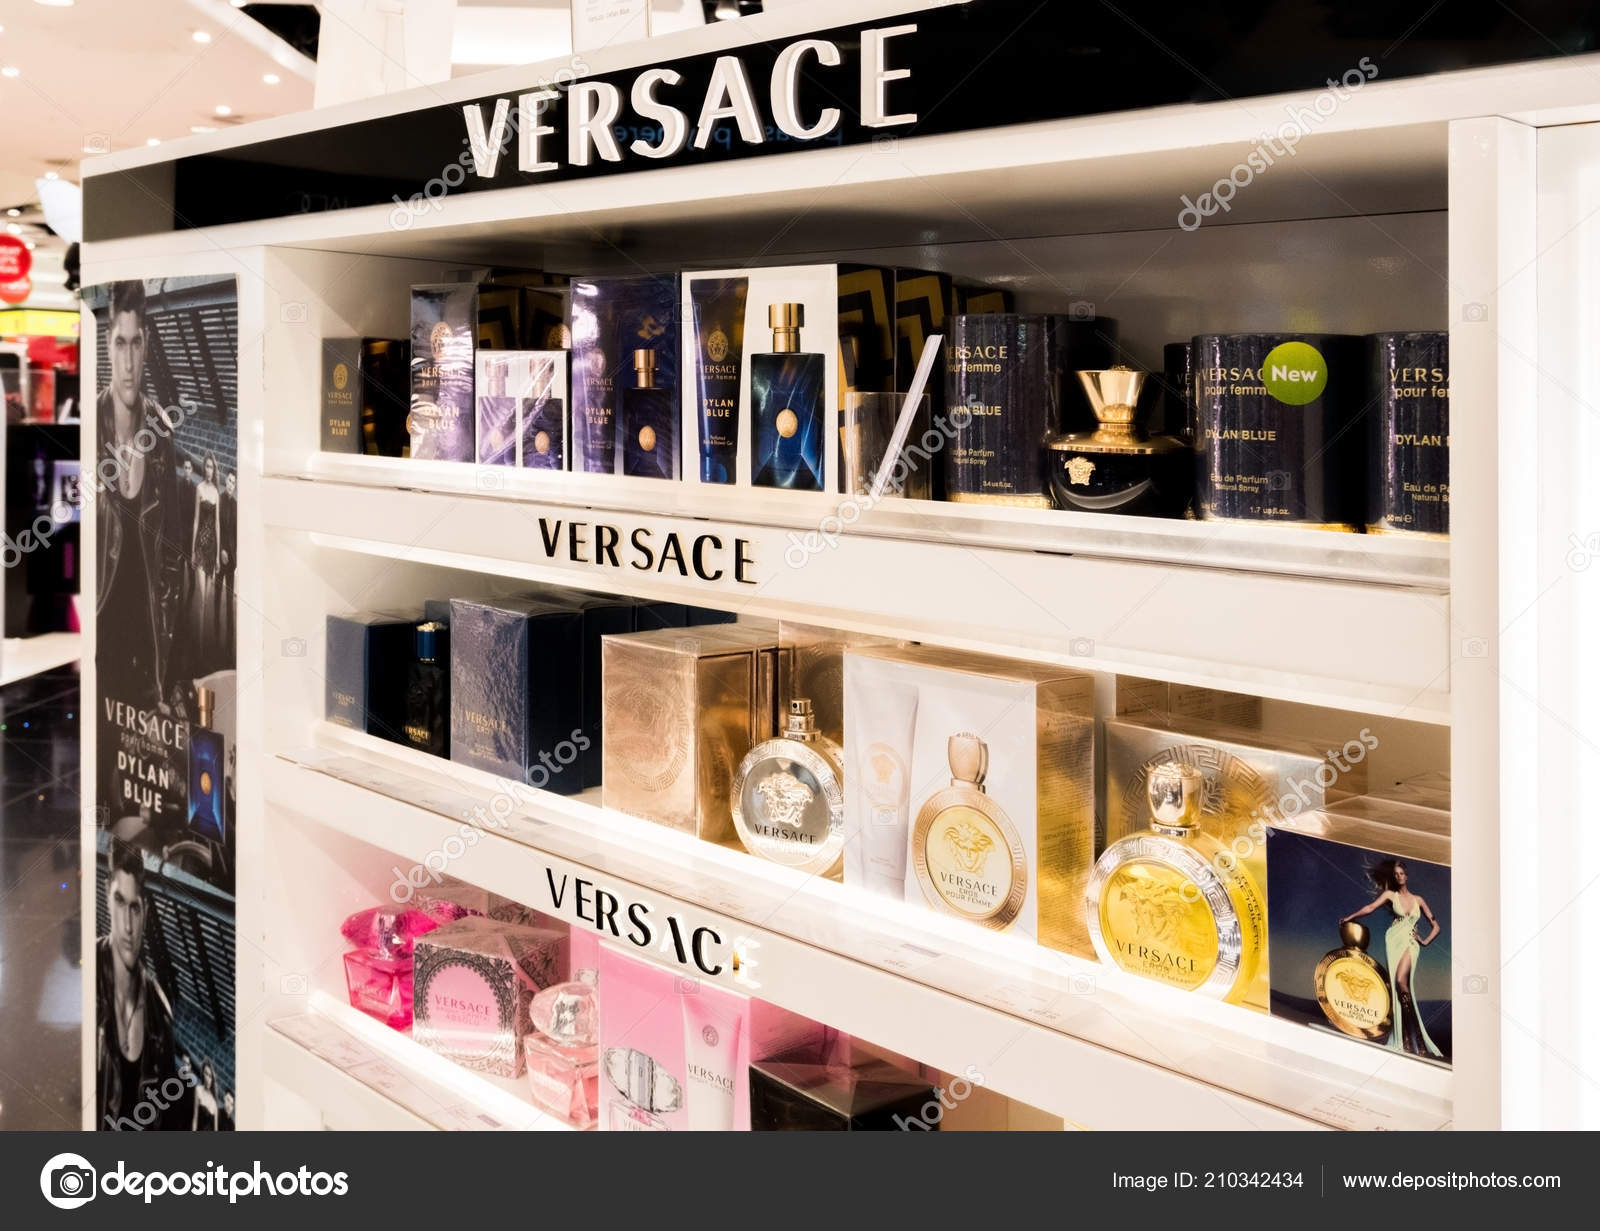 newest versace perfume 2018